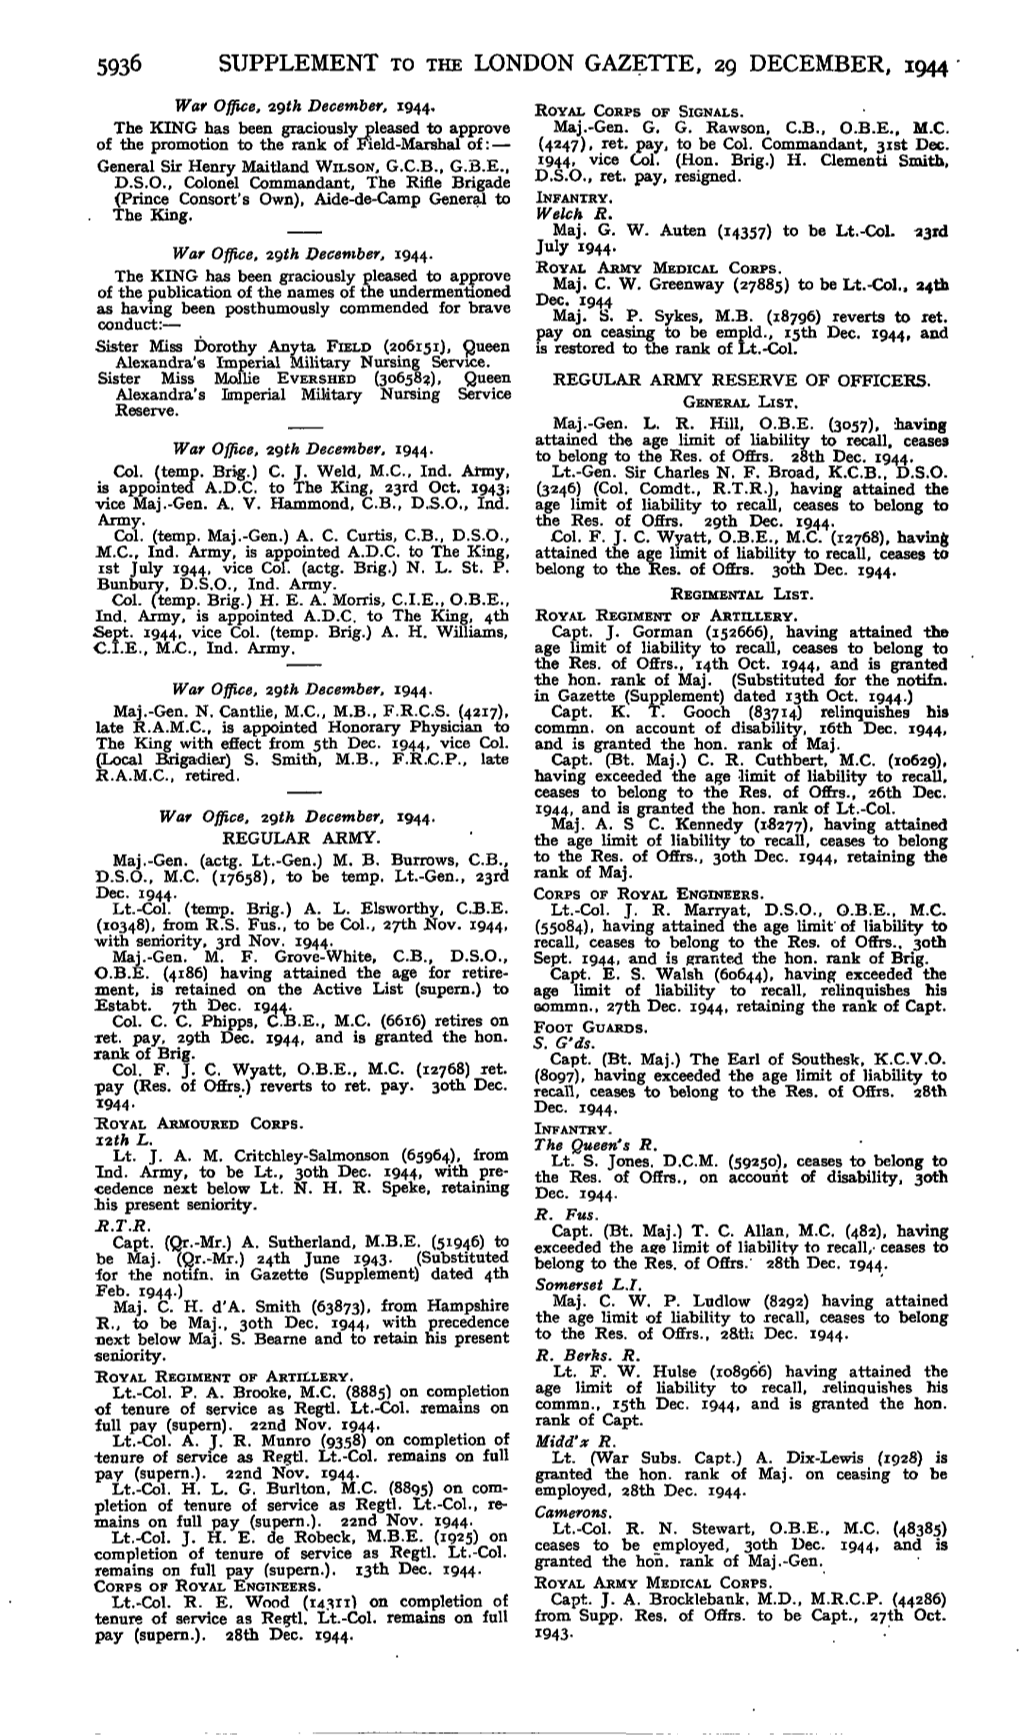 5936 Supplement to the London Gazette, 29 December, 1944